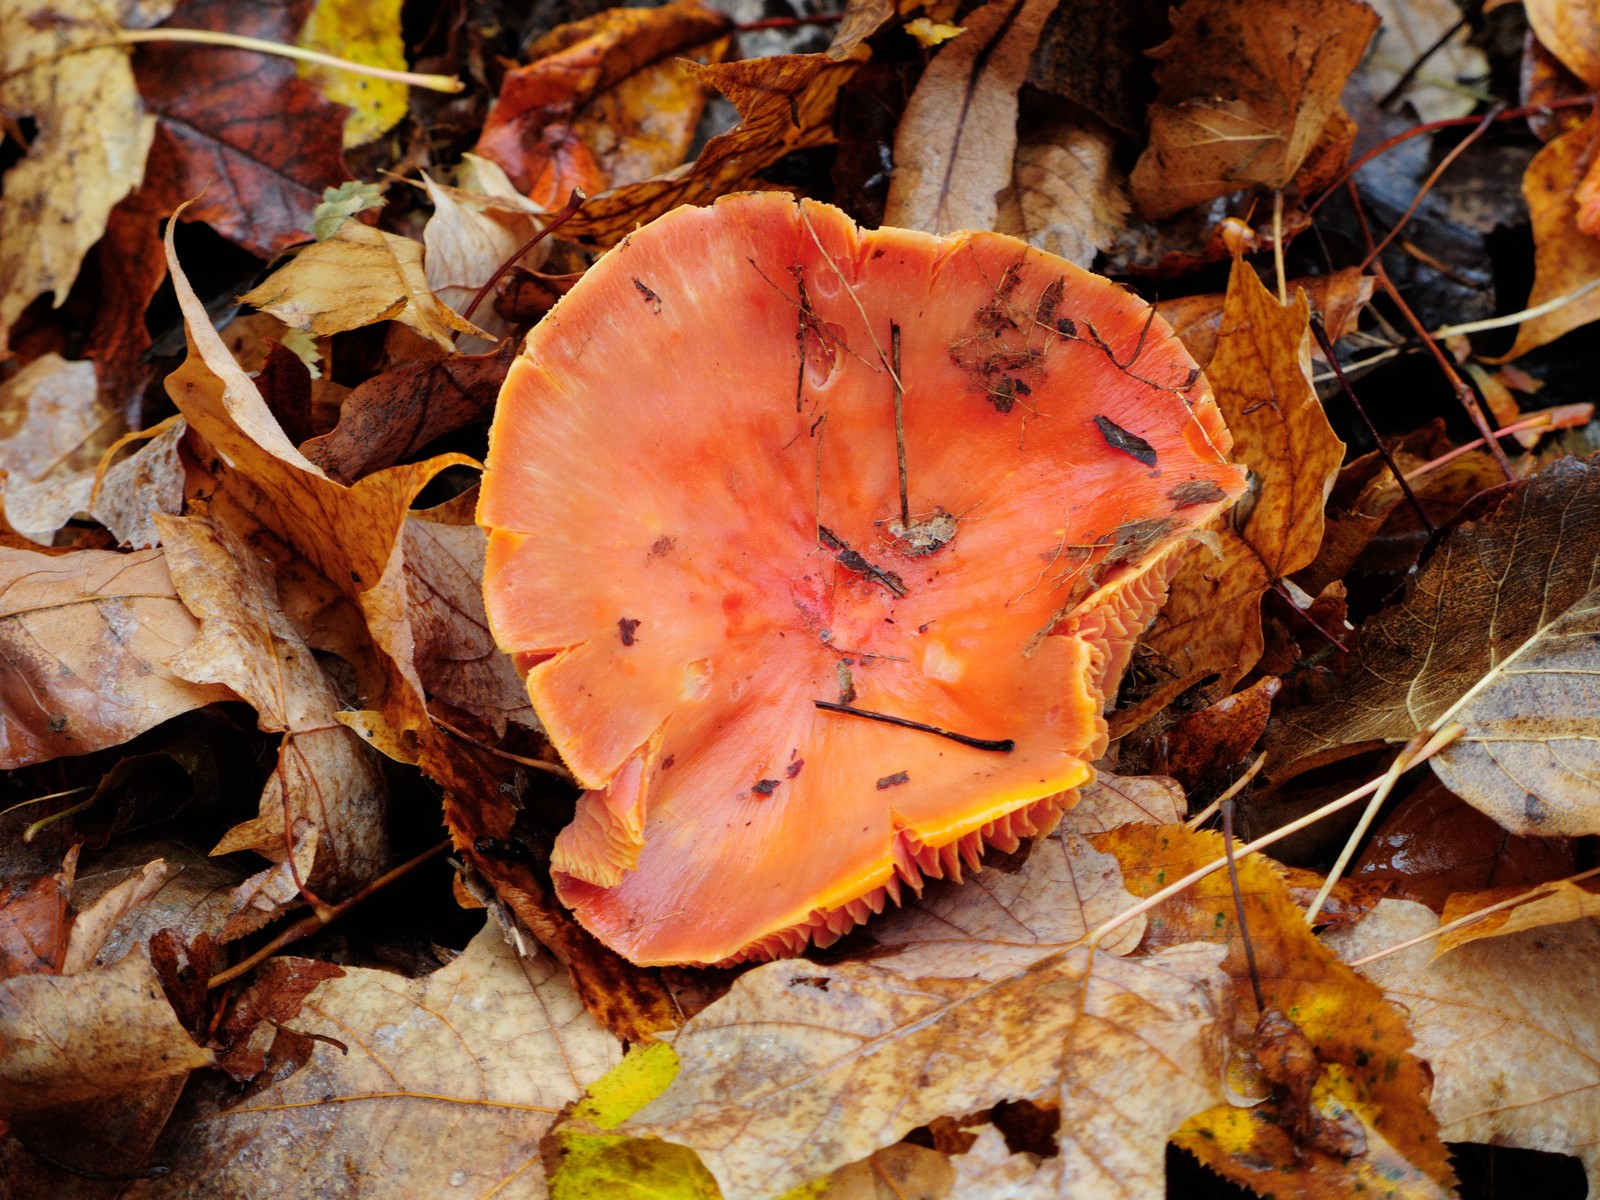 201310171028022 Vermillion Waxcap (Hygrocybe miniata) orange mushroom - Manitoulin Island, ON.JPG